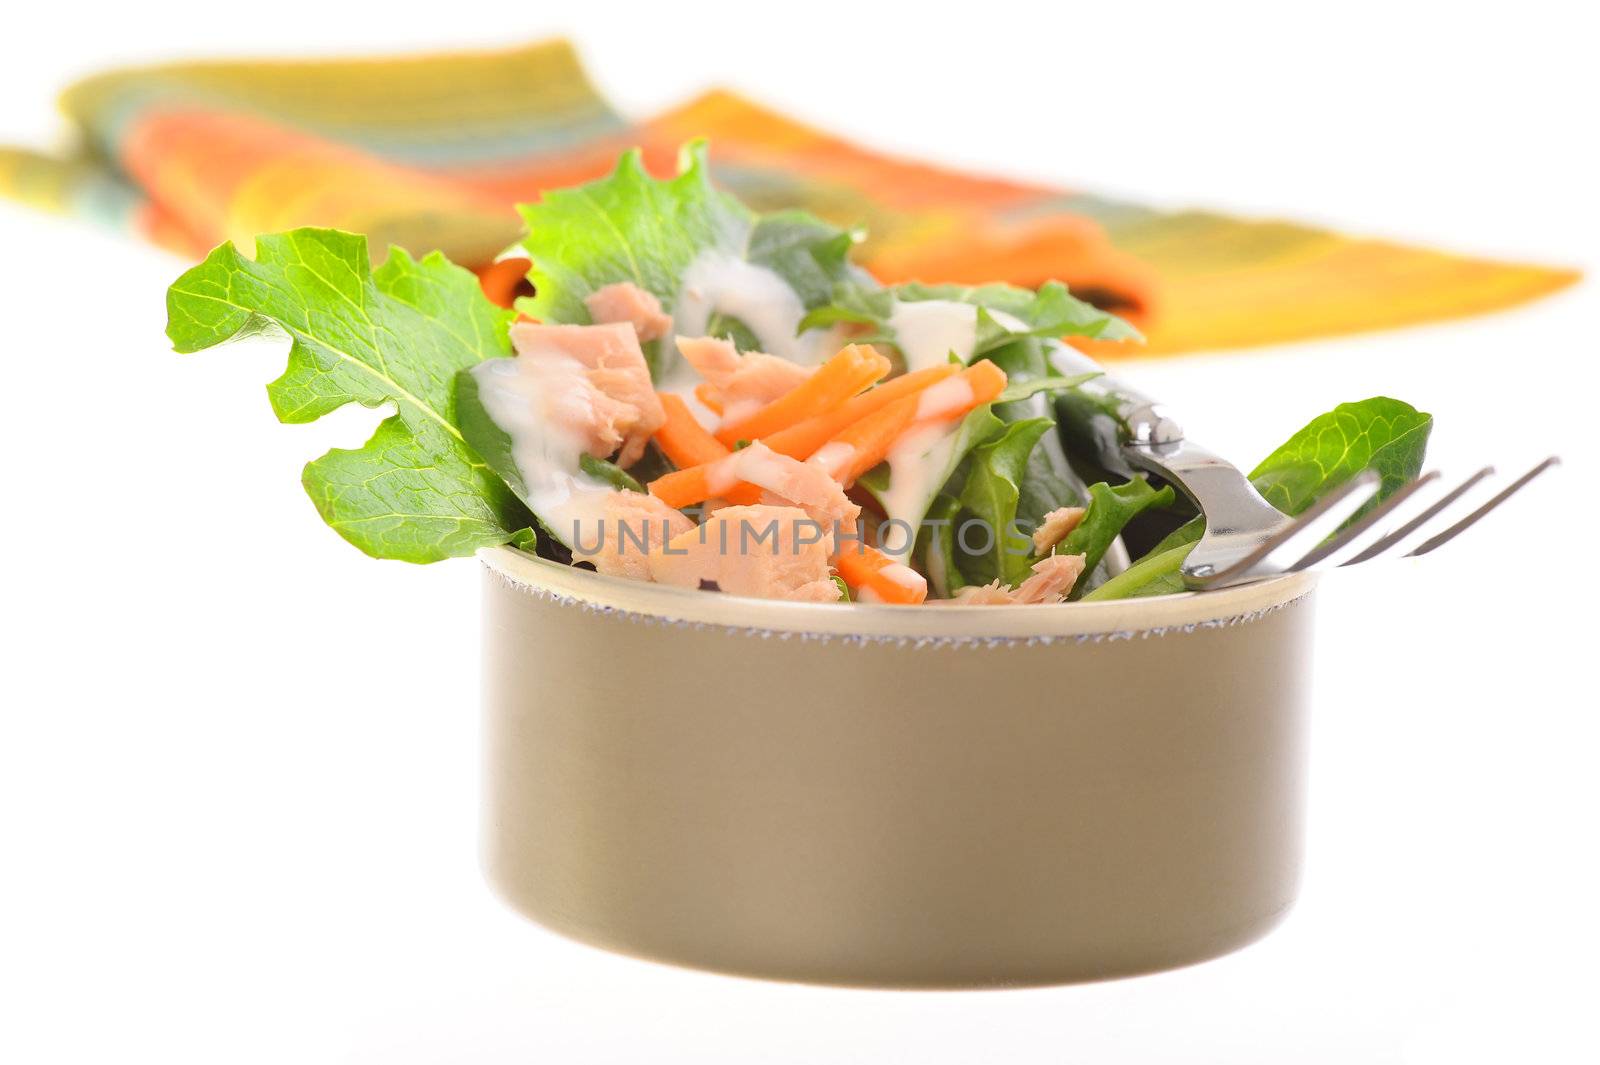 Tuna Salad by billberryphotography